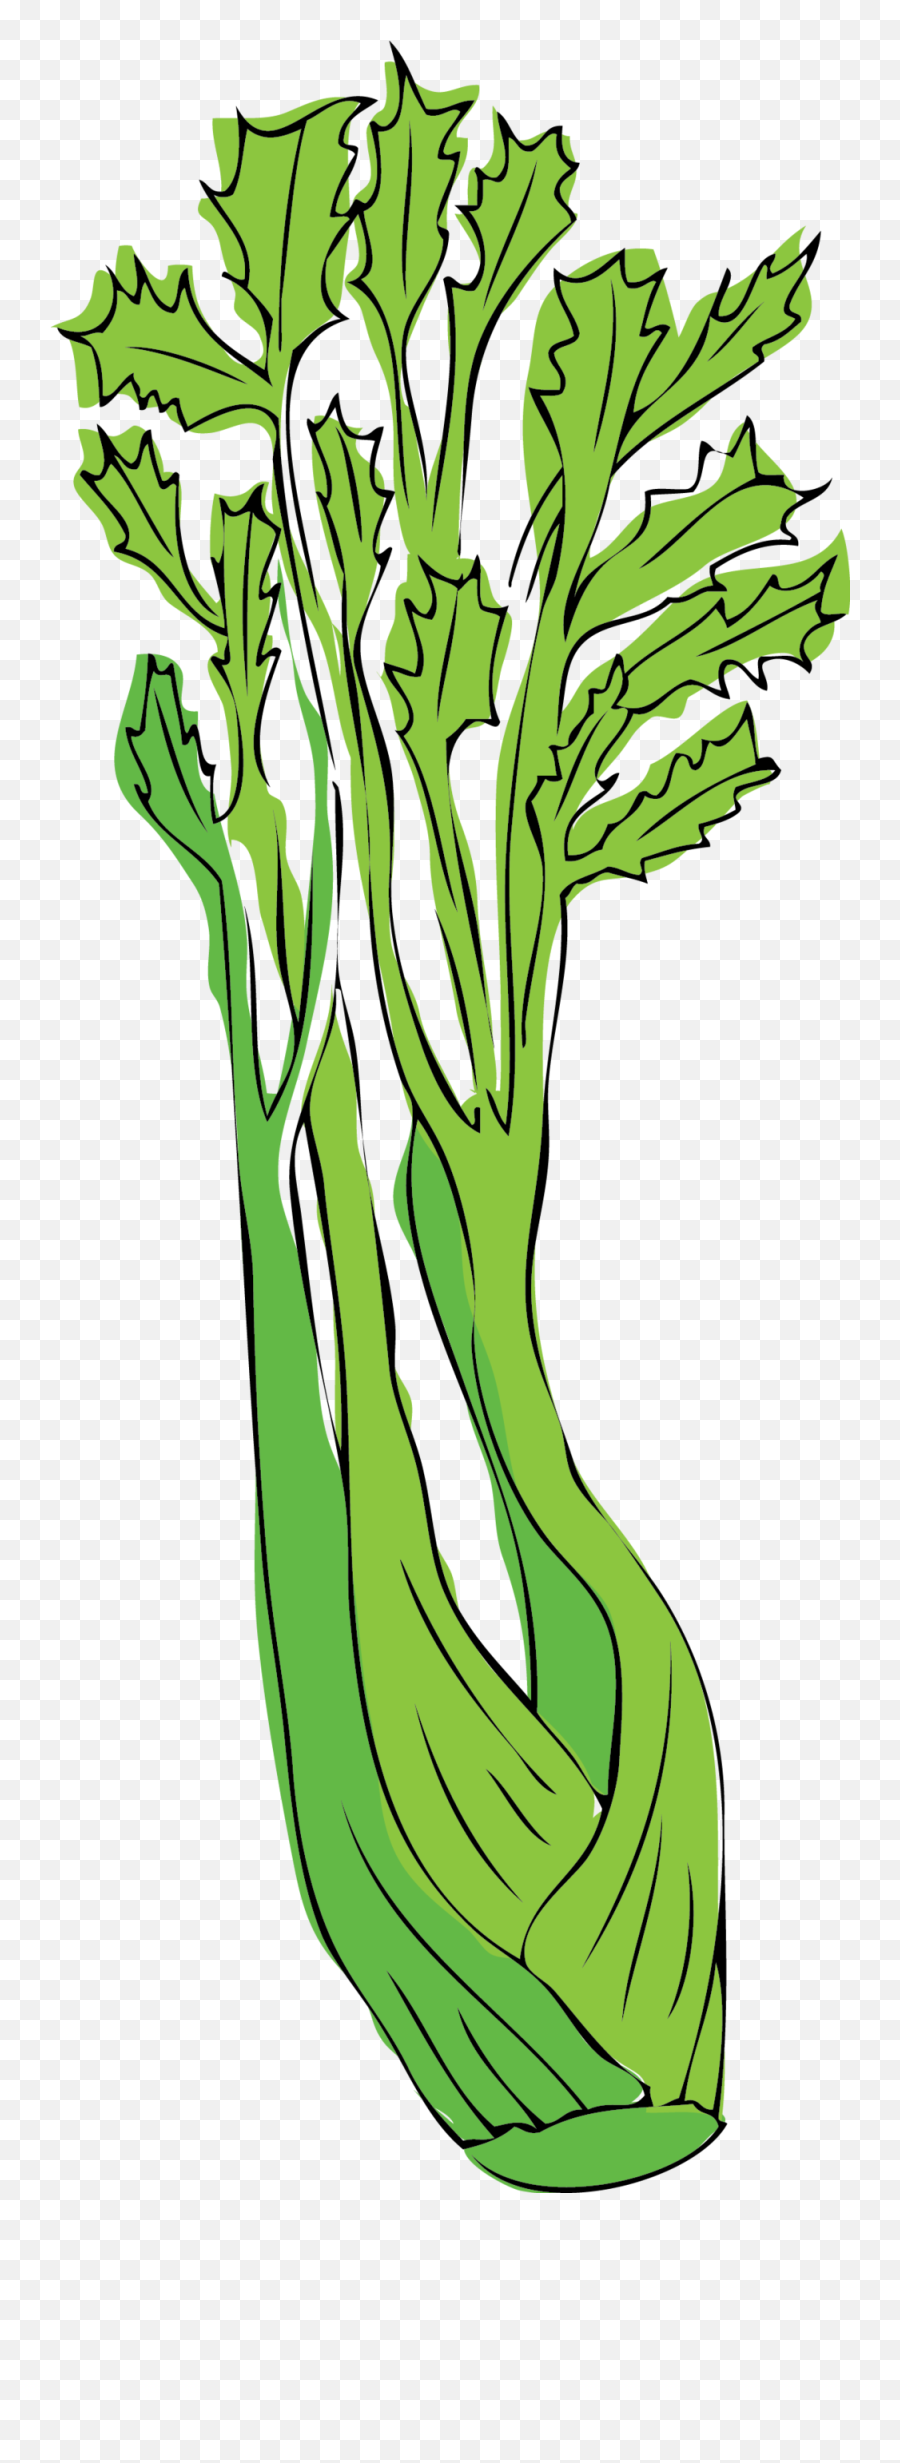 Celery Png - Clip Art,Celery Png